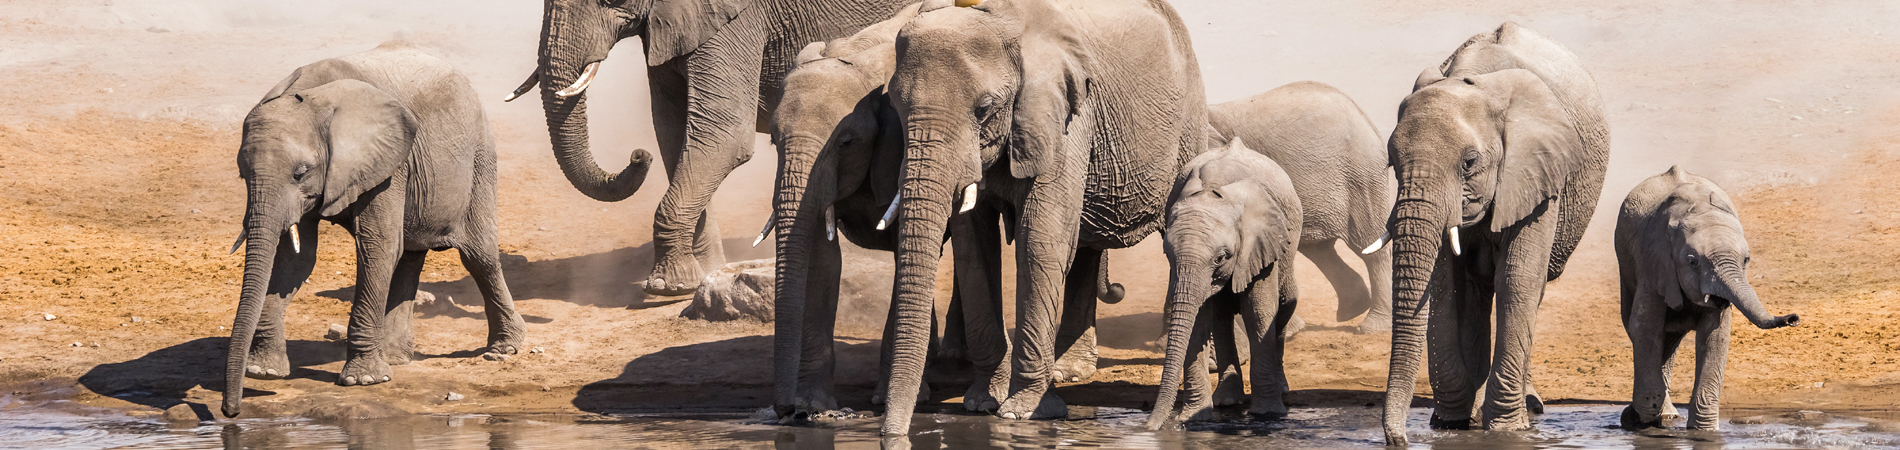 shutterstock nam elephants header